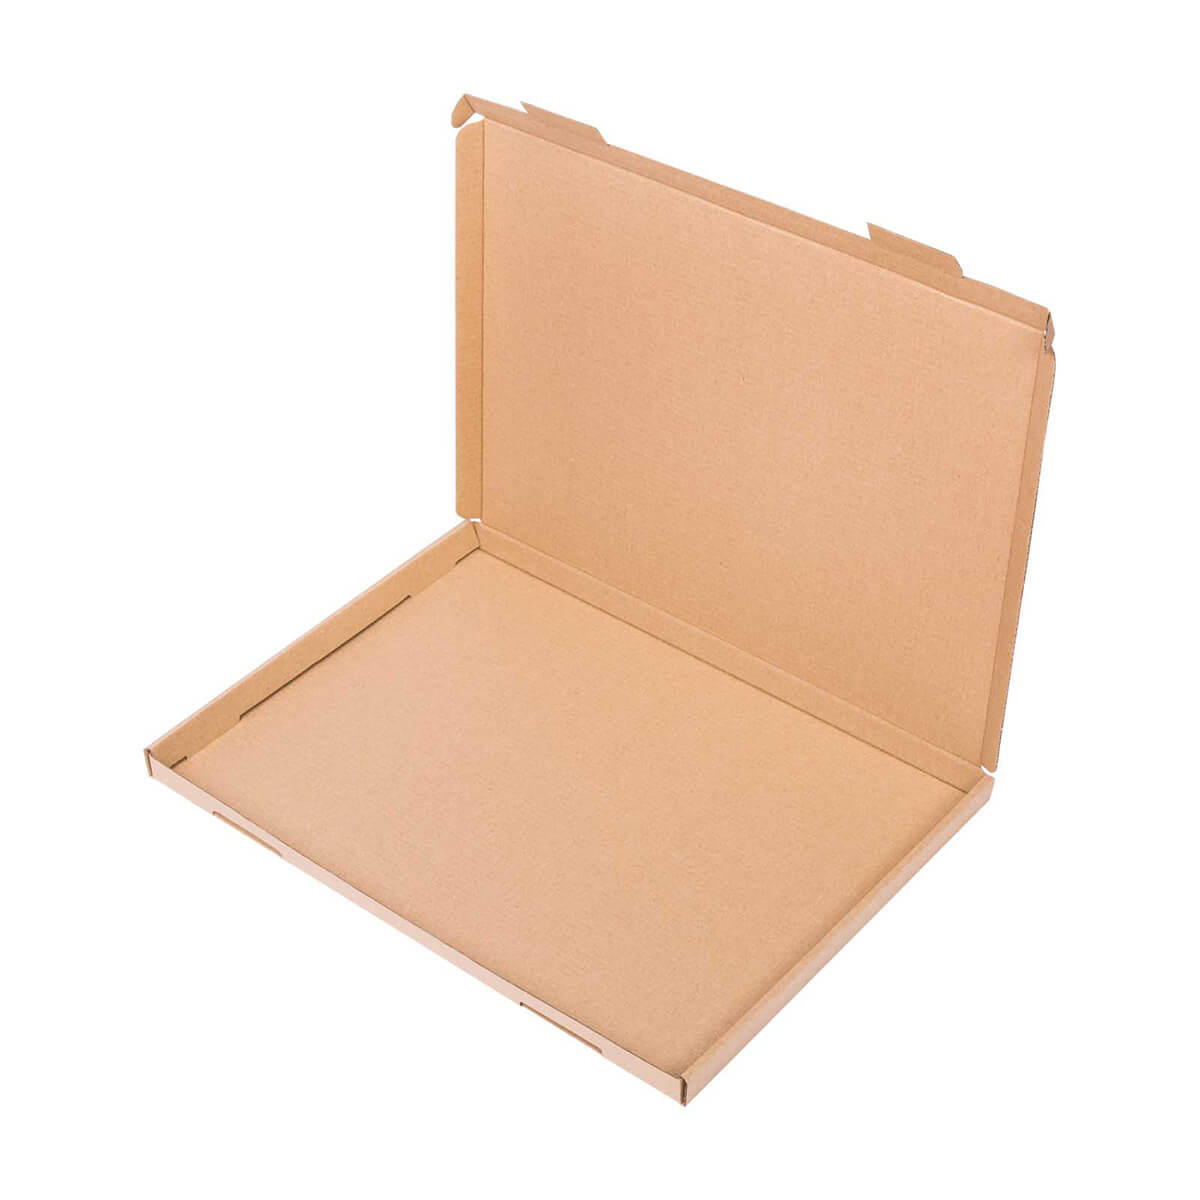 Big letter-sized carton 350x250x20 mm - GB 2, brown (DIN A4)